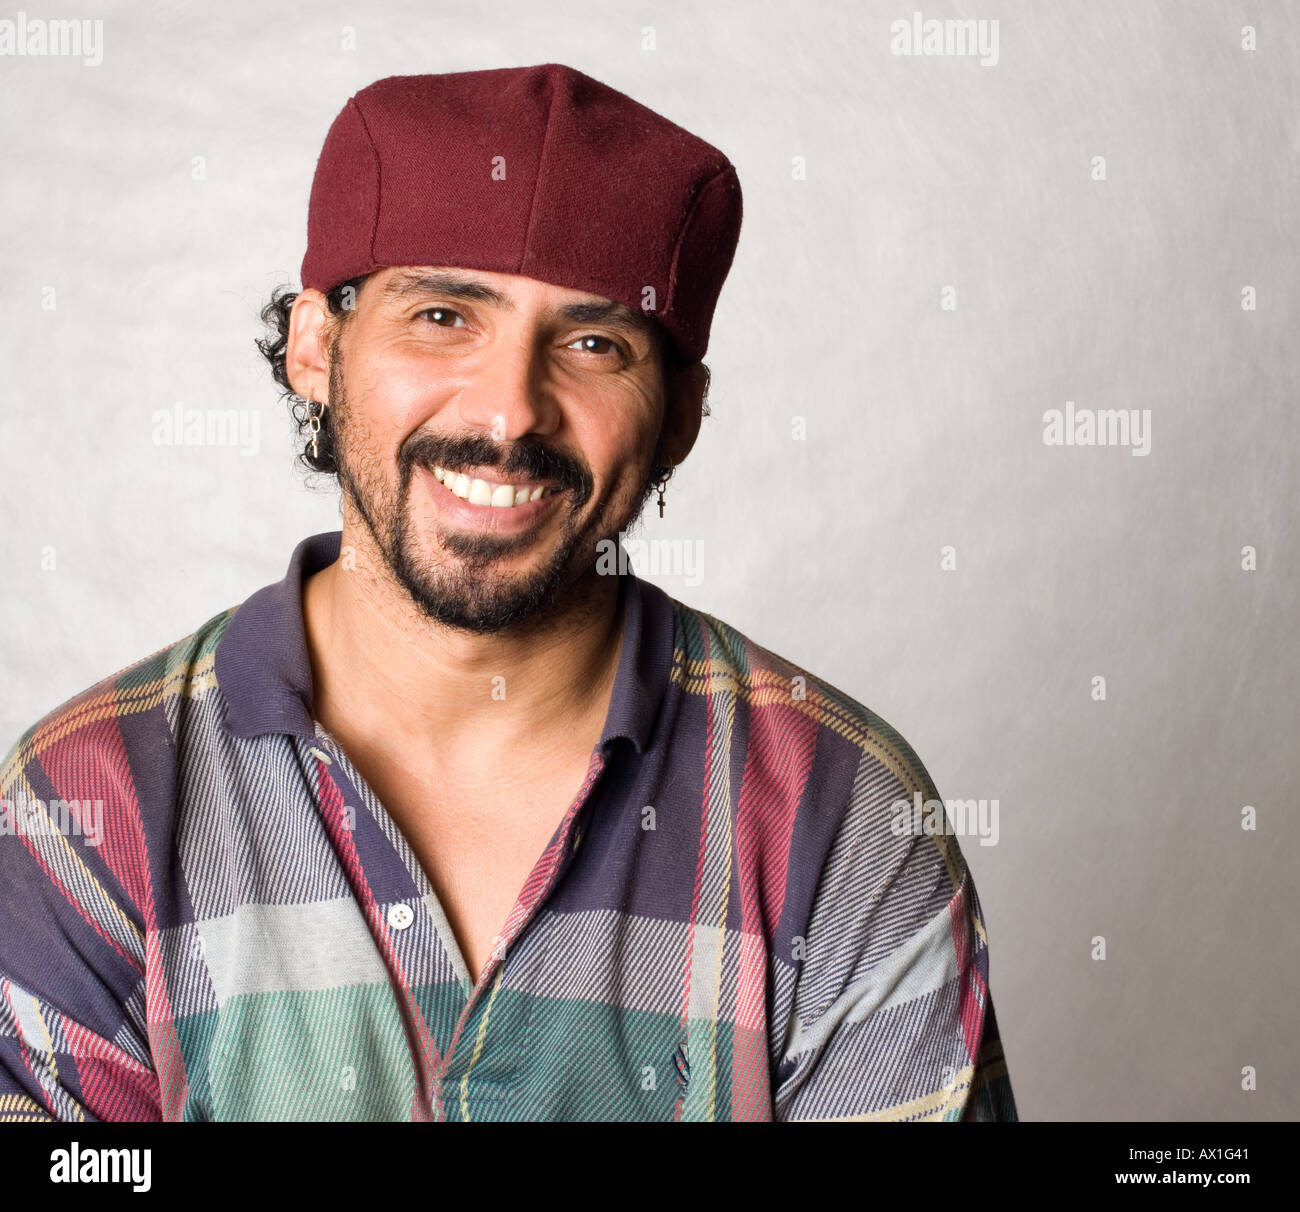 Portrait of a happy Latino man Stock Photo - Alamy